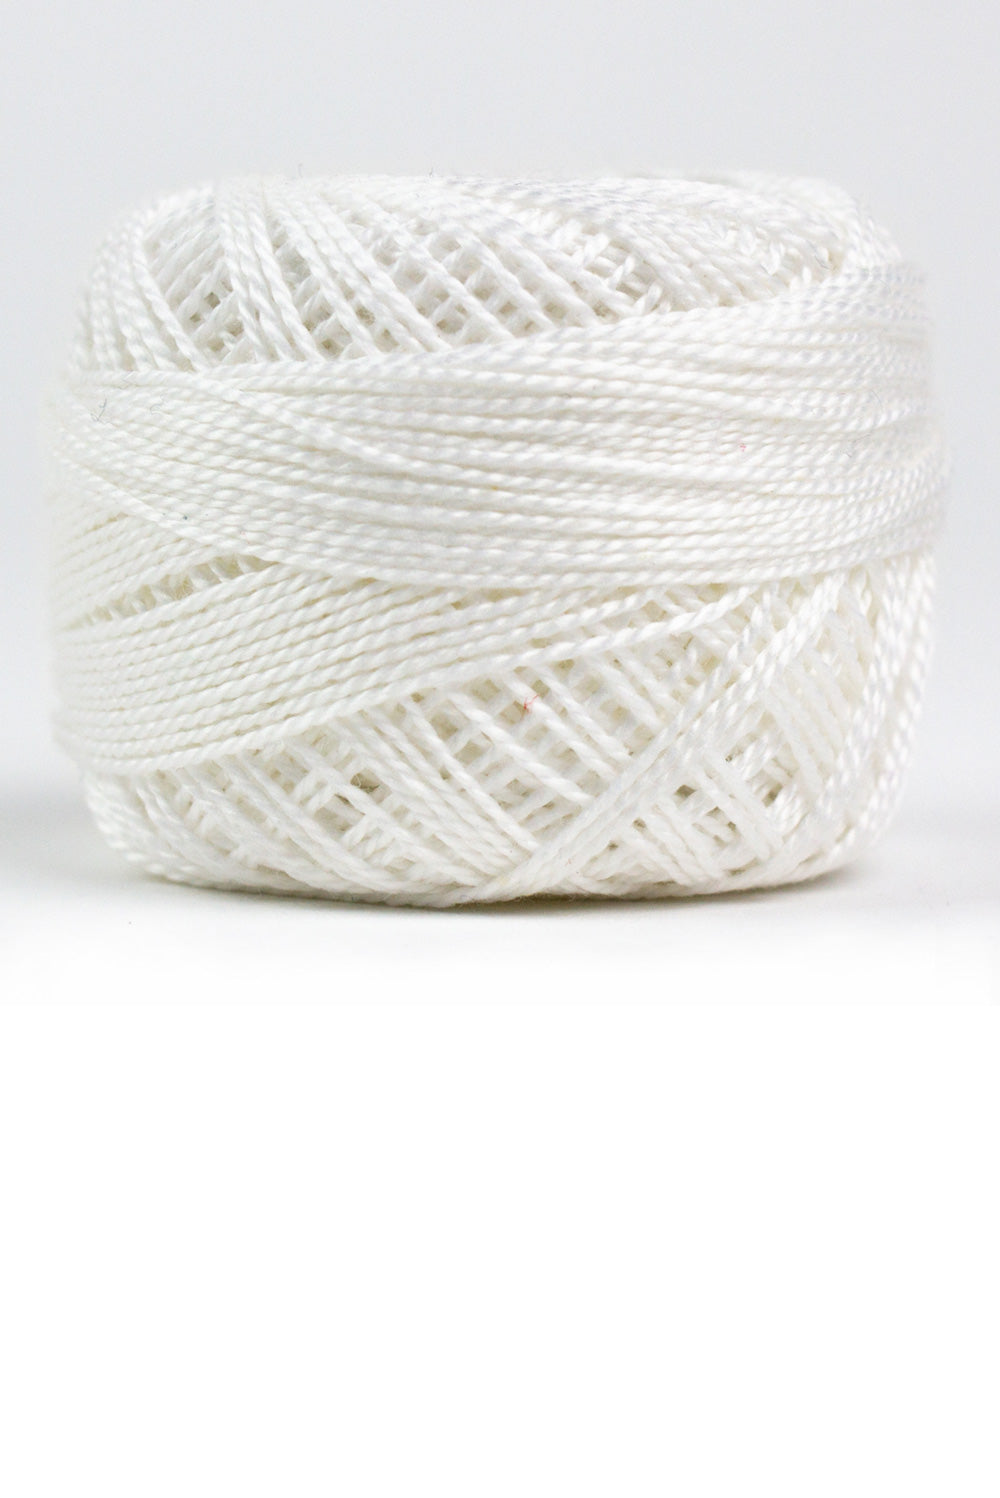 EZ 2129 DAISY, Size 8 Perle Cotton by Alison Glass for Wonderfil